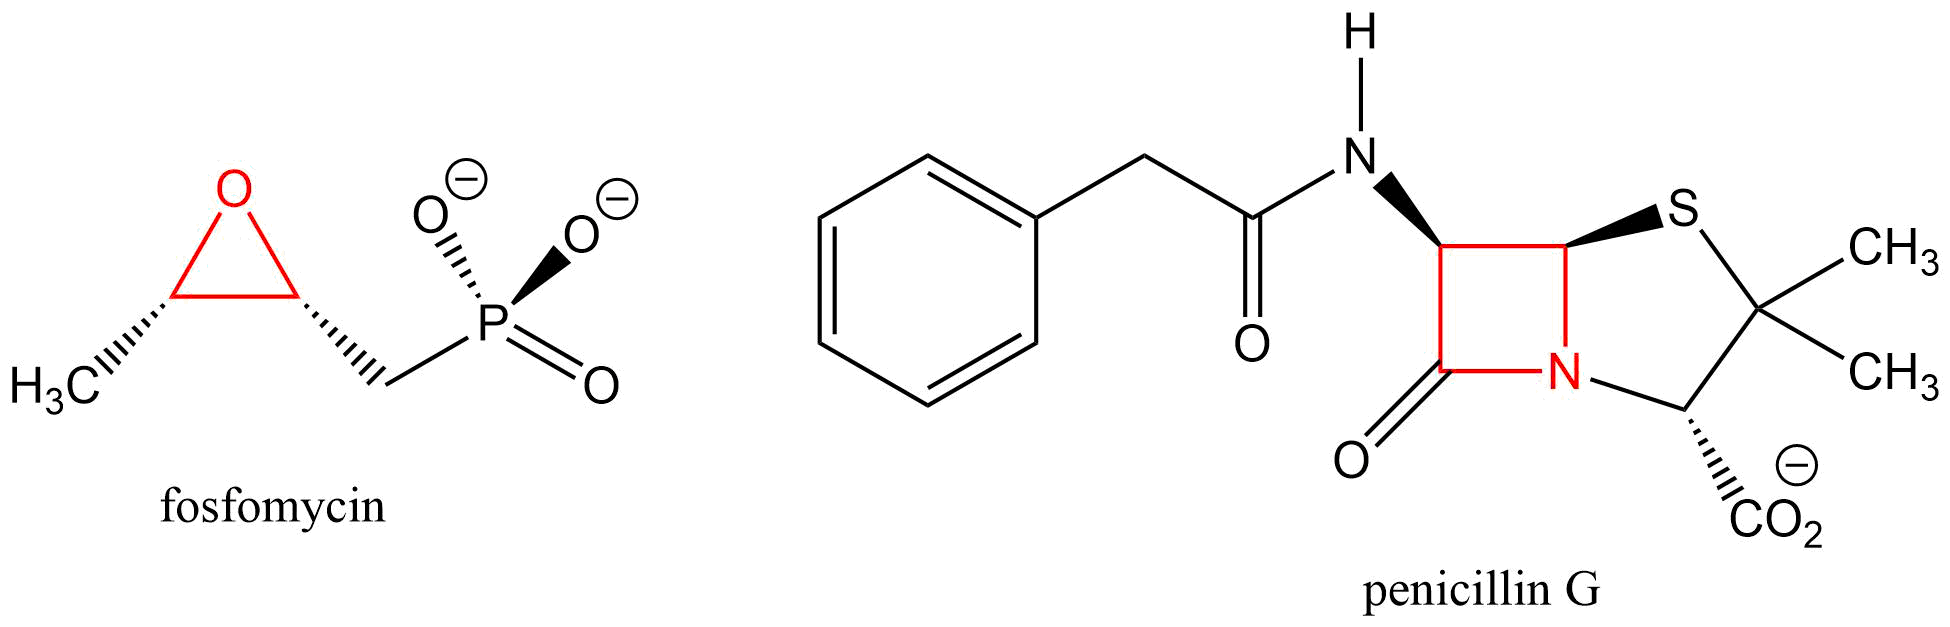 Left: fosfomycin; includes cyclopropane. Right: penicillin G; includes cyclobutane. 